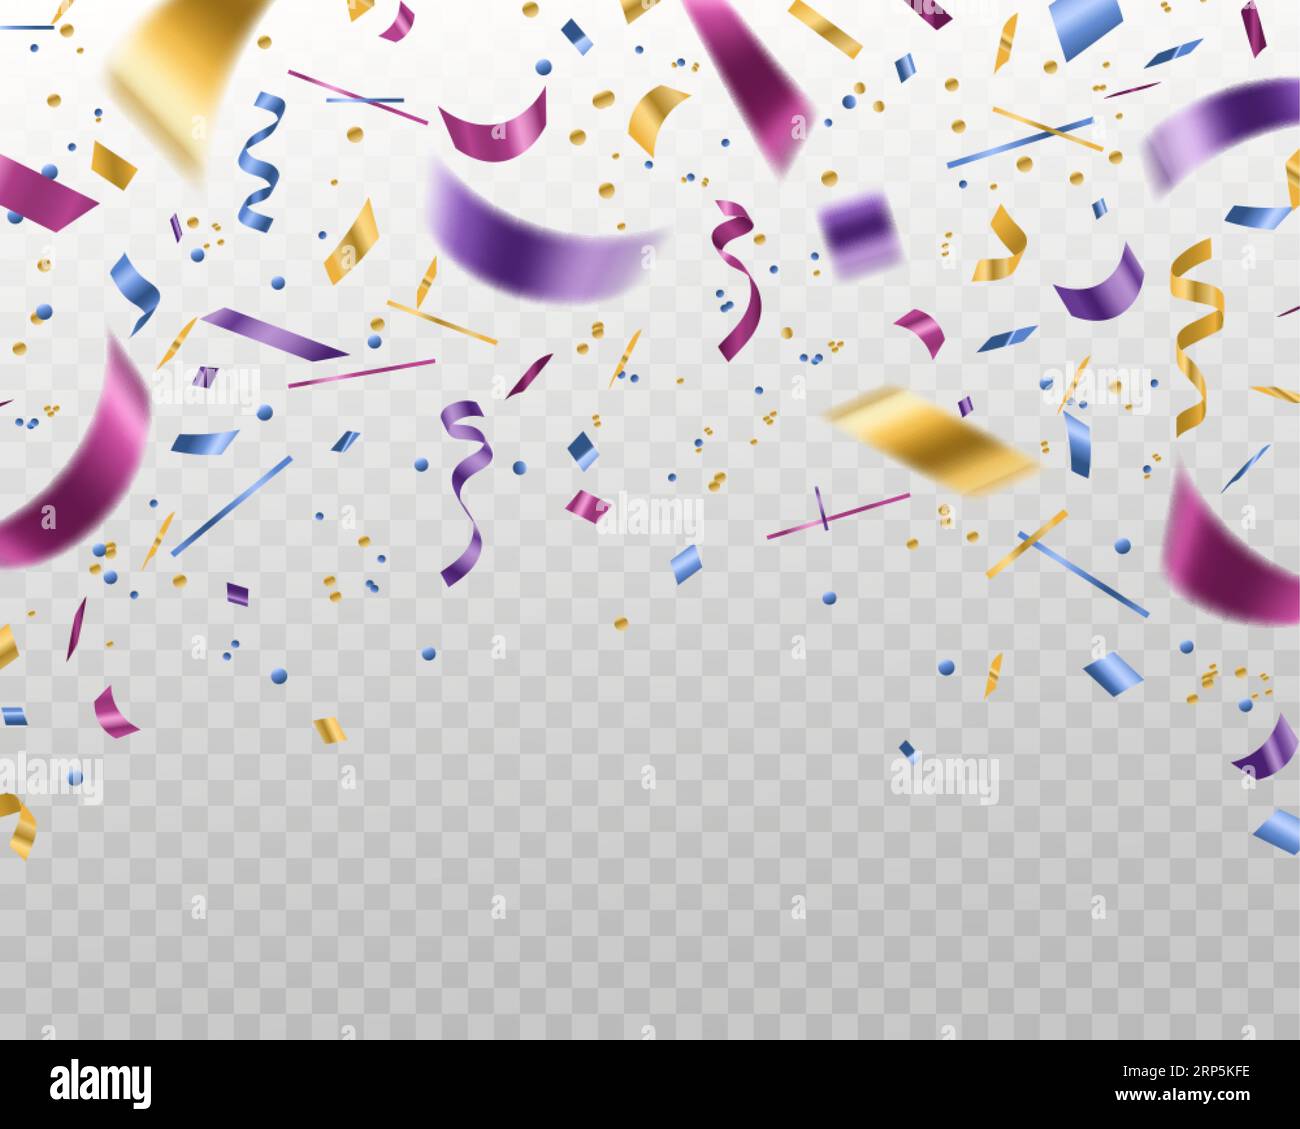 Festive background with falling glitter confetti Vector Image